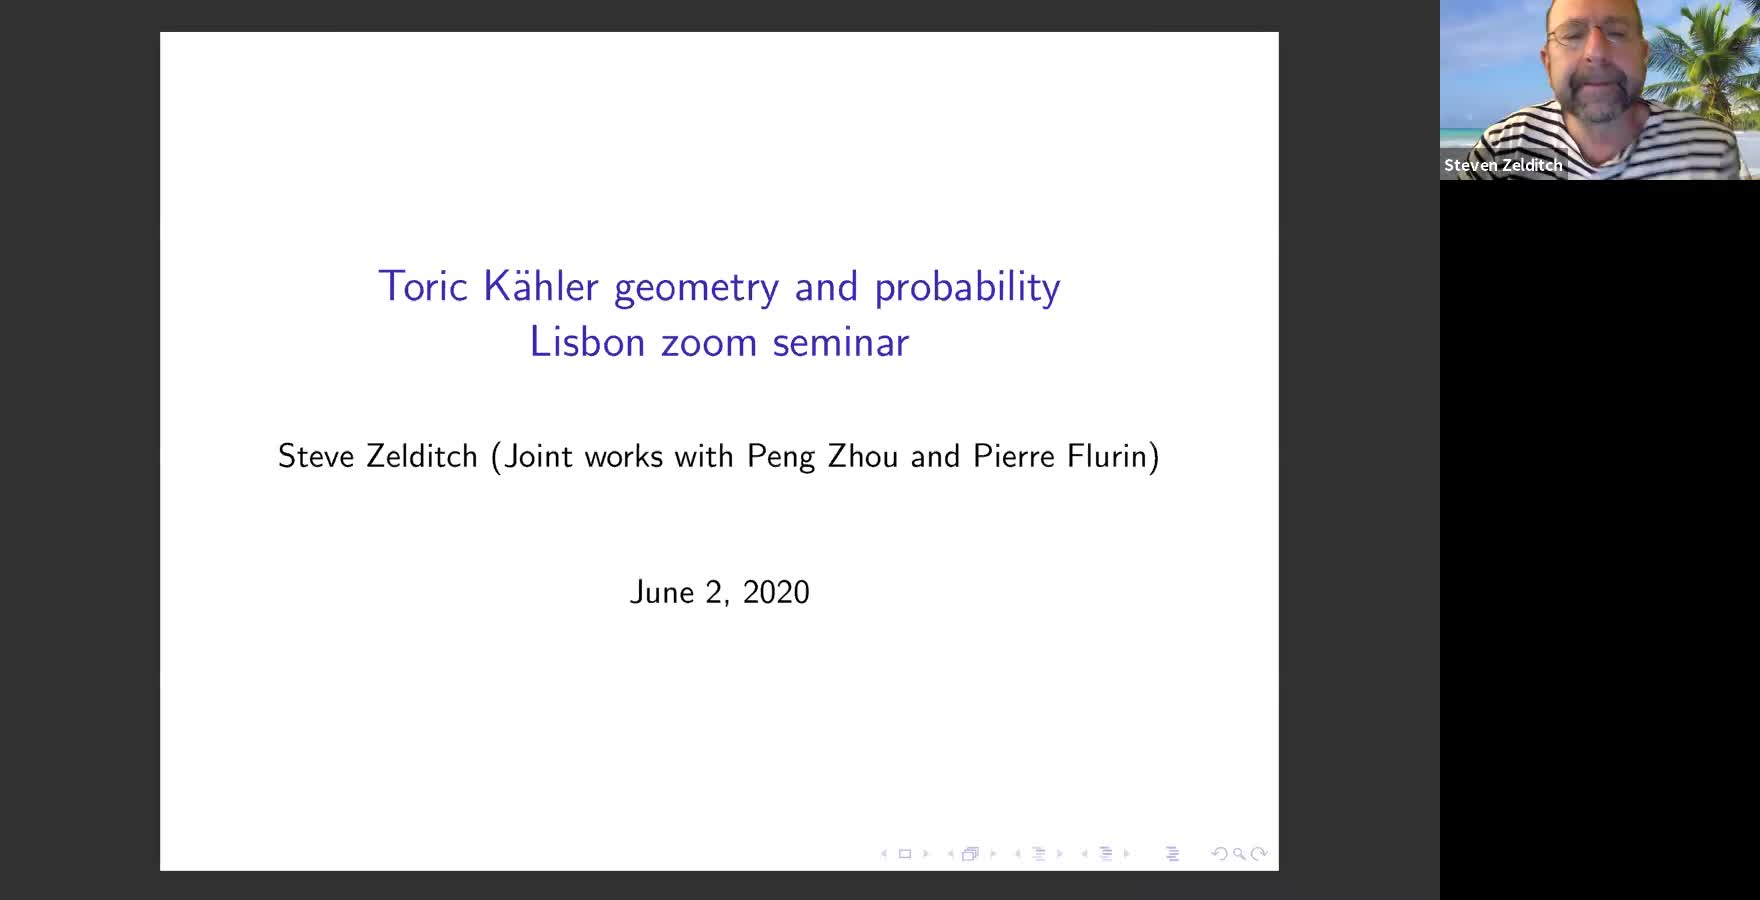 2020.06.02 Probabilistic aspects of toric Kahler geometry